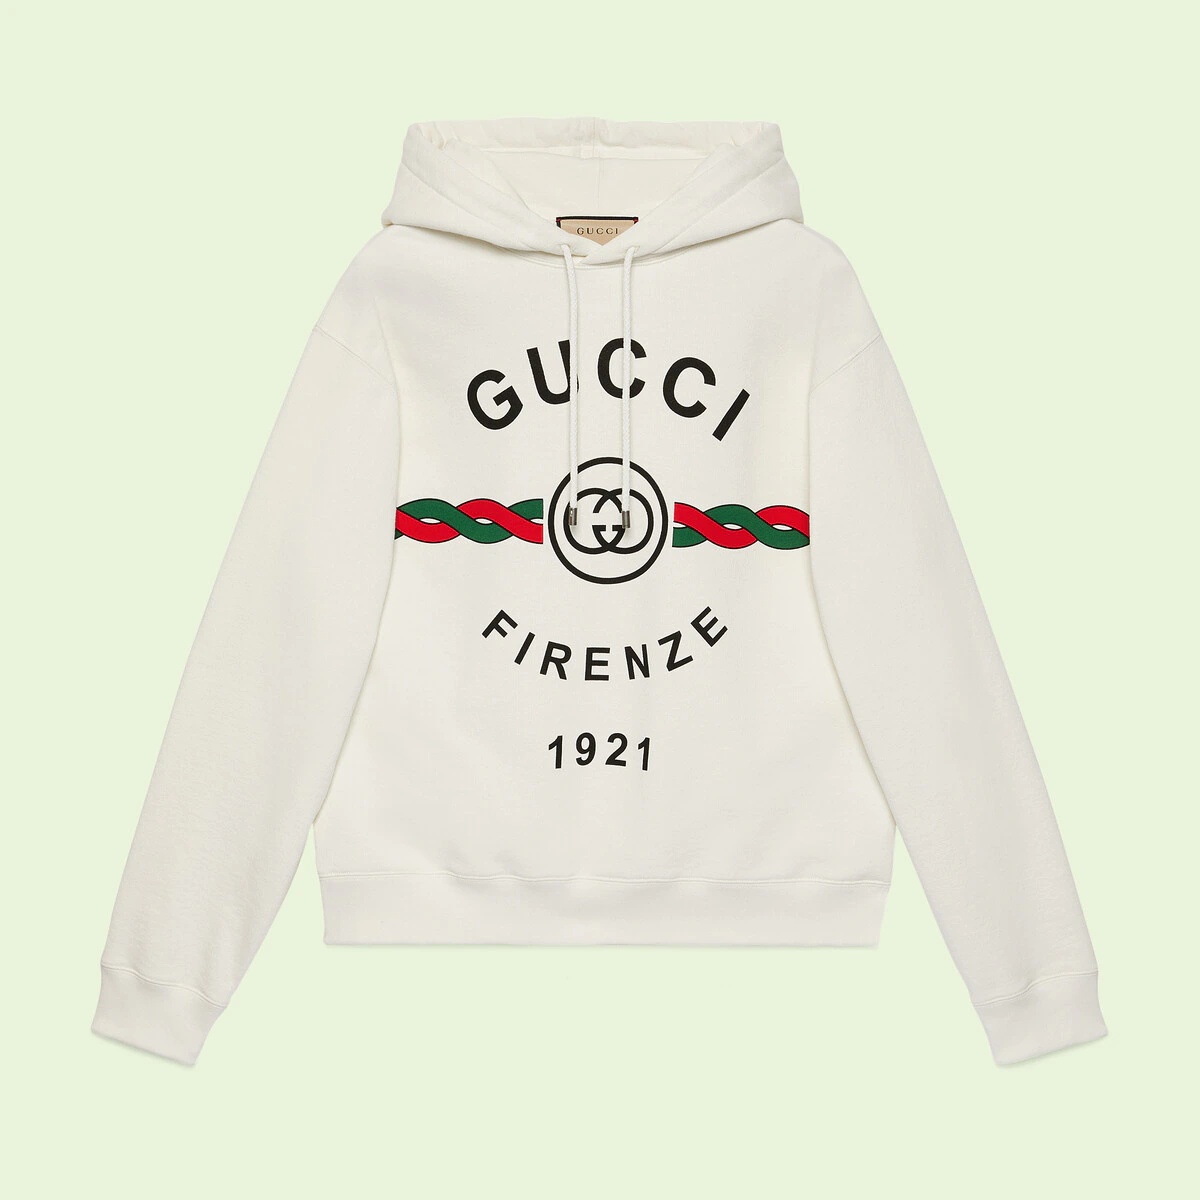 Cotton 'Gucci Firenze 1921' hooded sweatshirt - 1